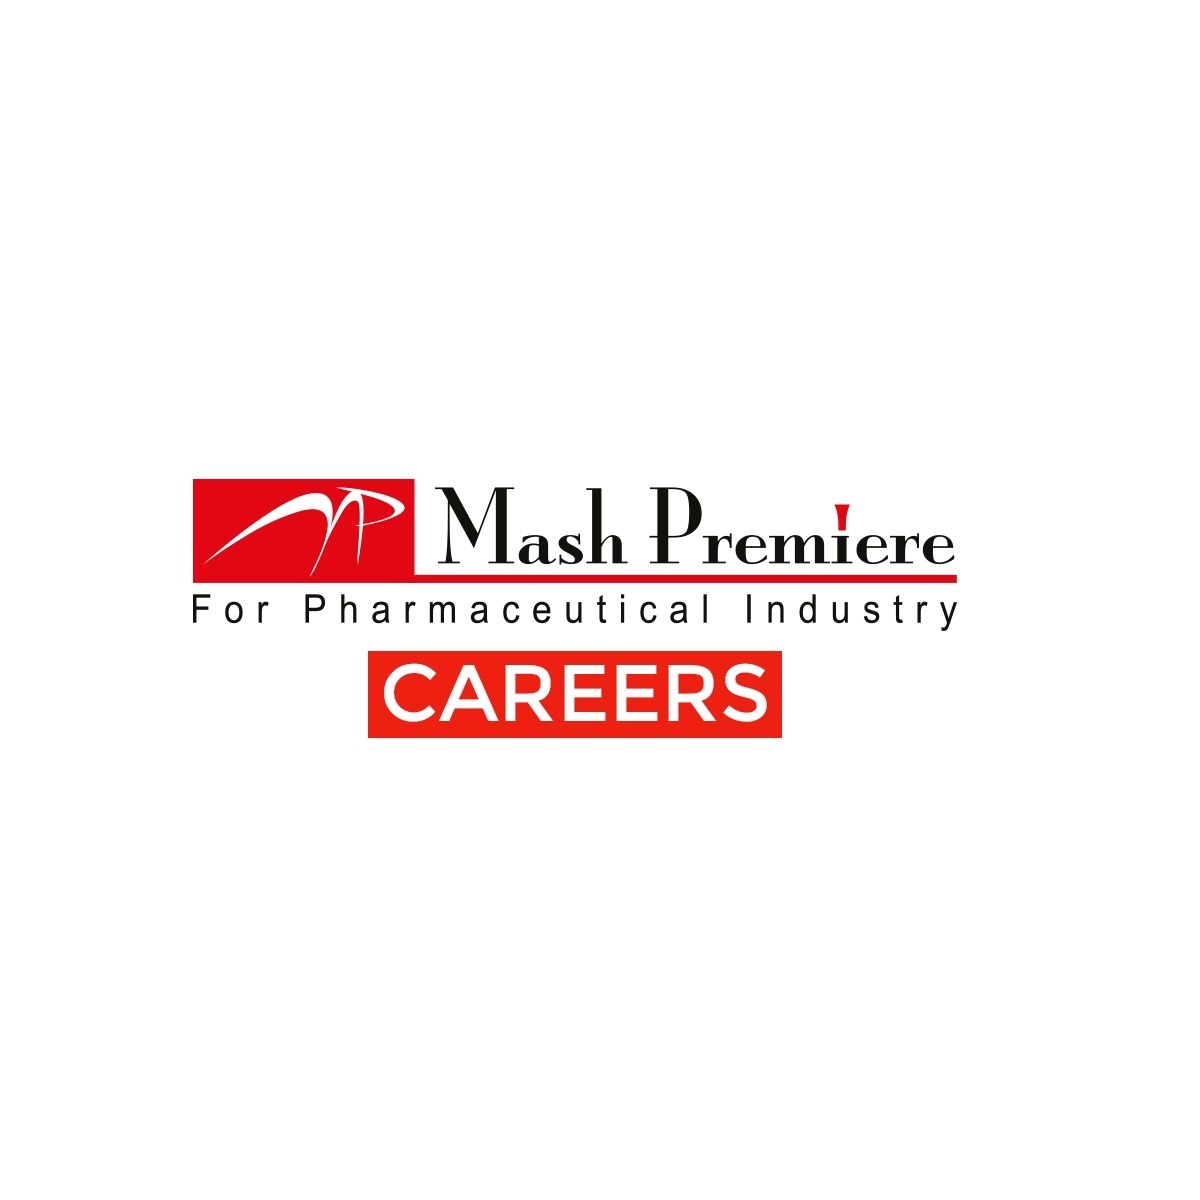 Mash Premiere Pharmaceutical